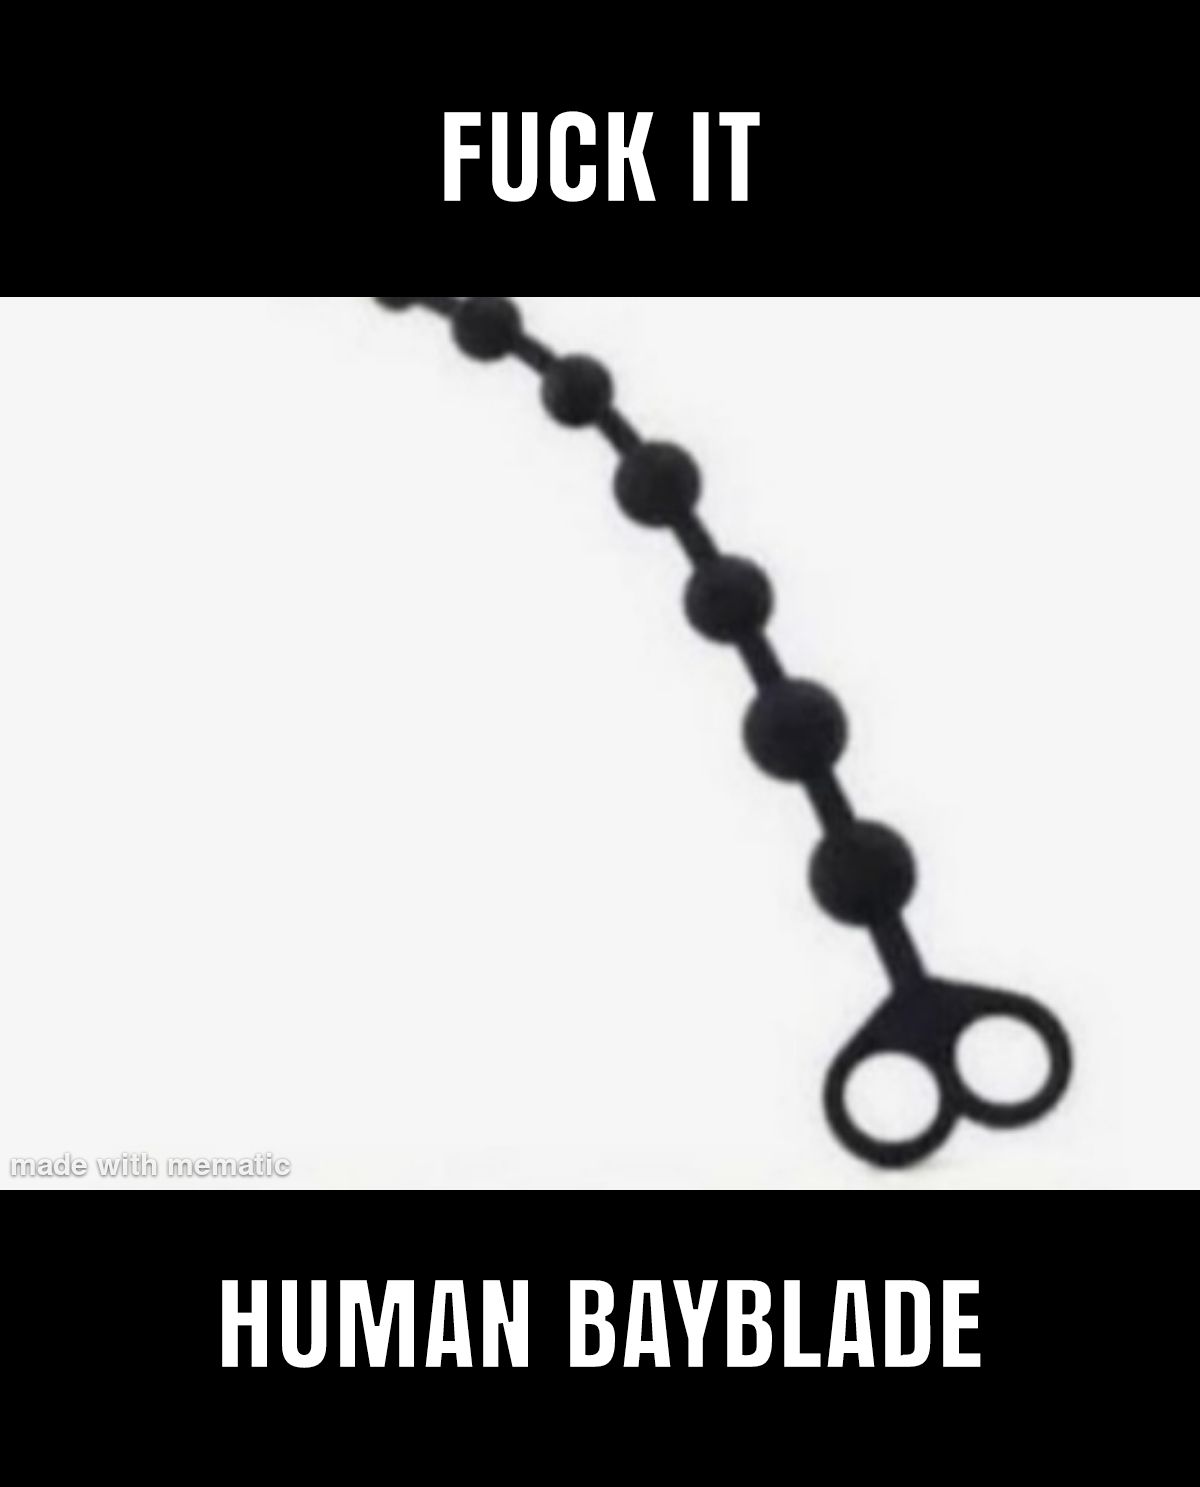 Human bayblade